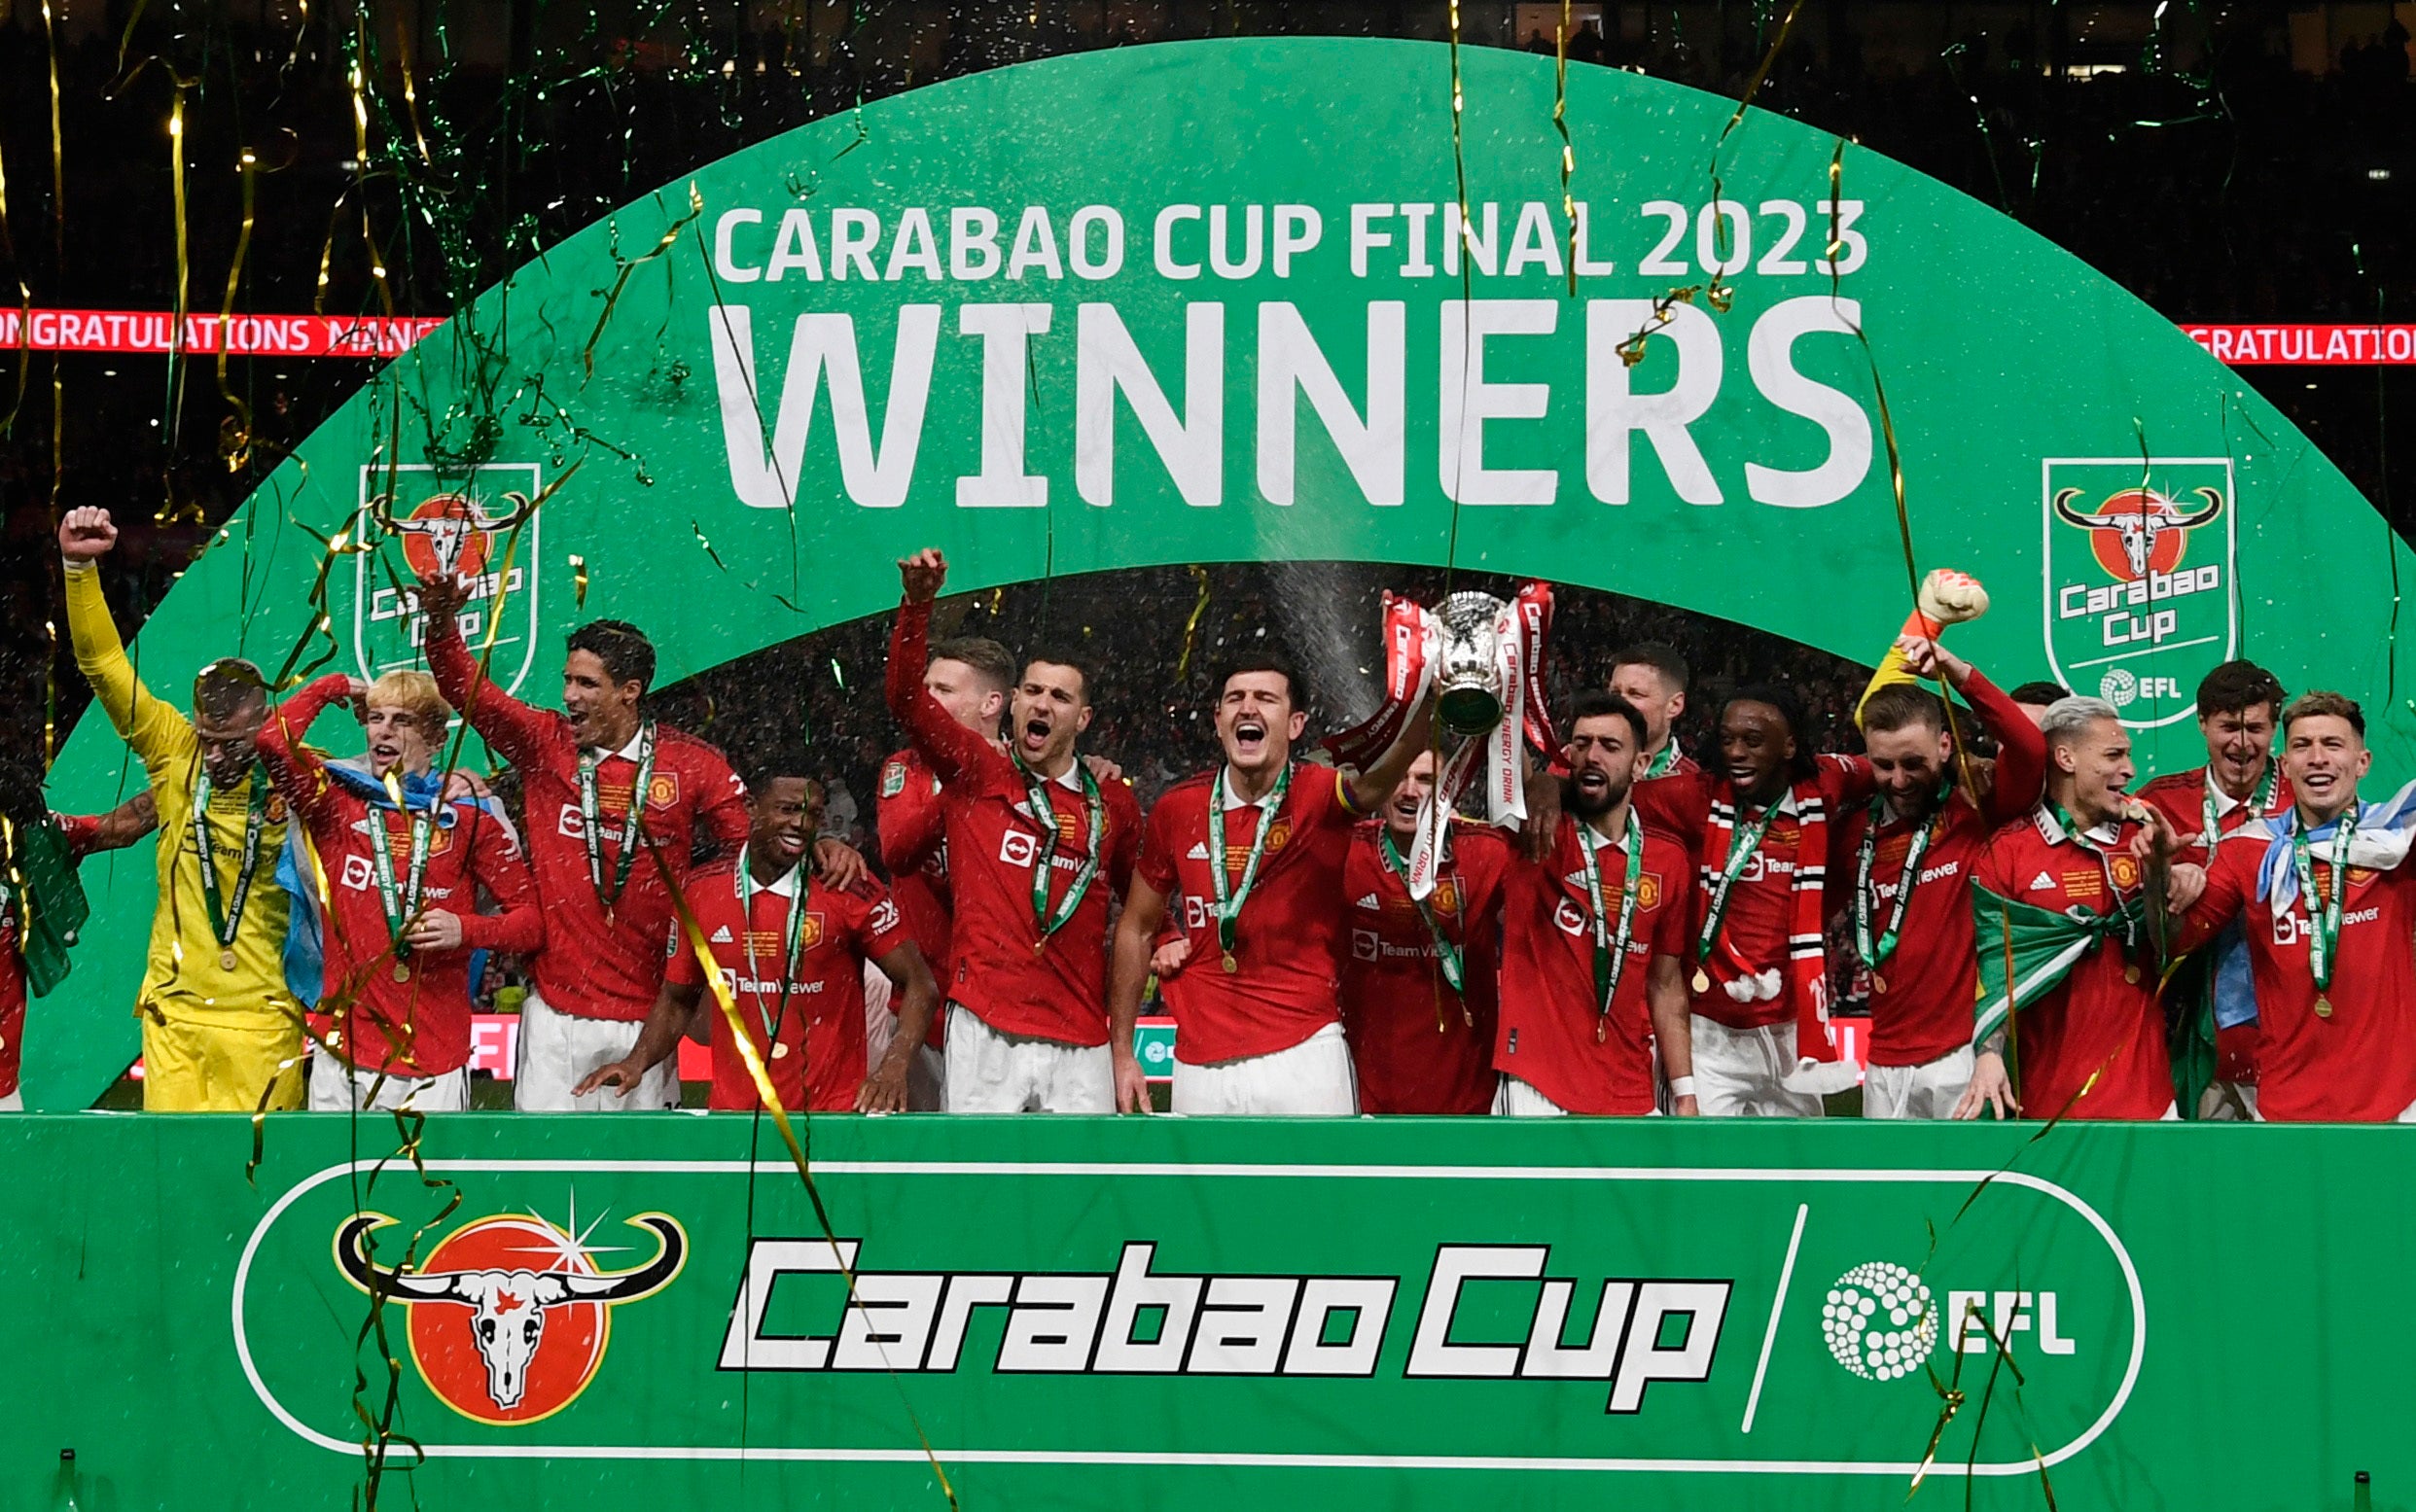 Rose Carr News: Carabao Cup Final 2023 Score Update